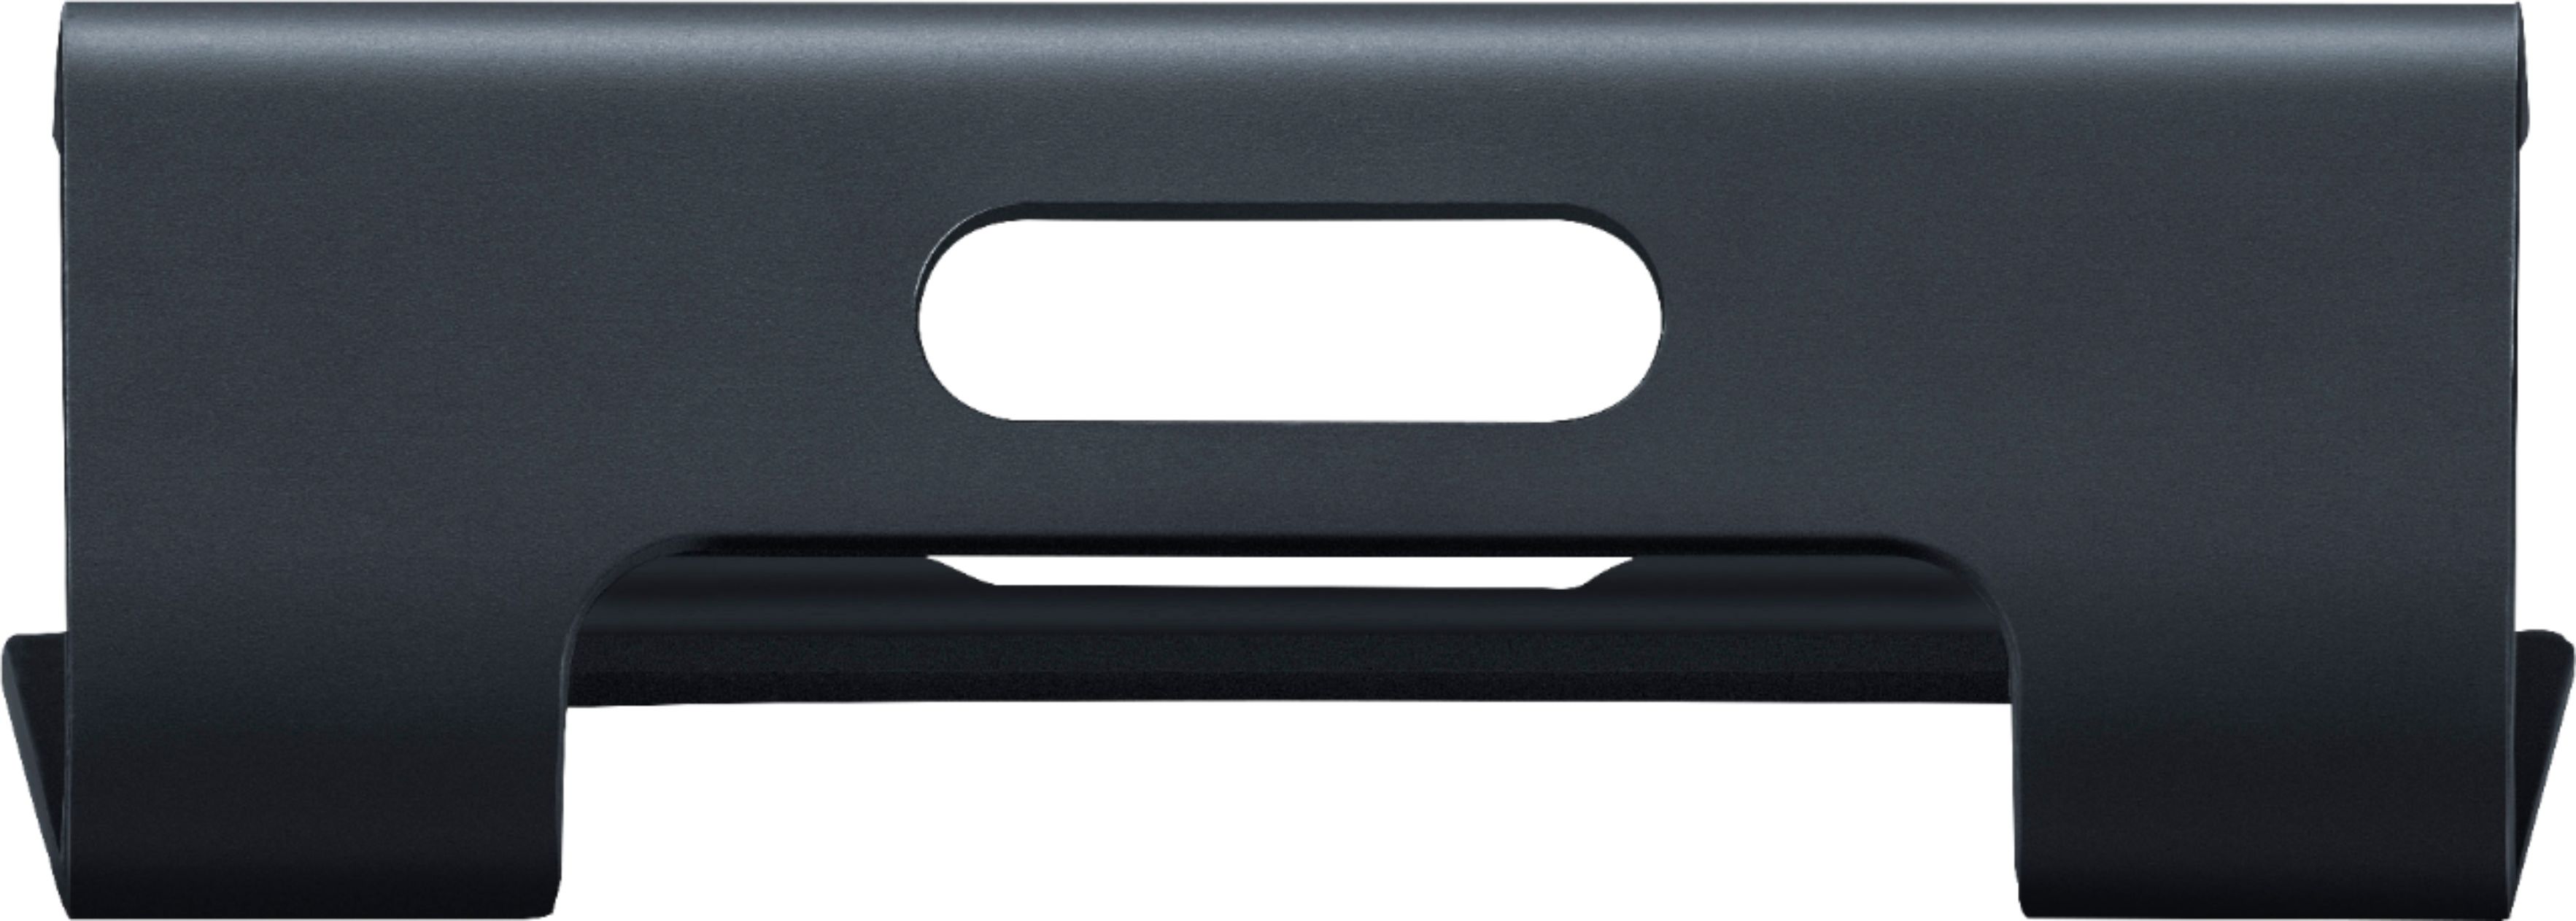 Angle View: Razer Laptop Stand: Ergonomic Design - Anodized Aluminum Construction - Black